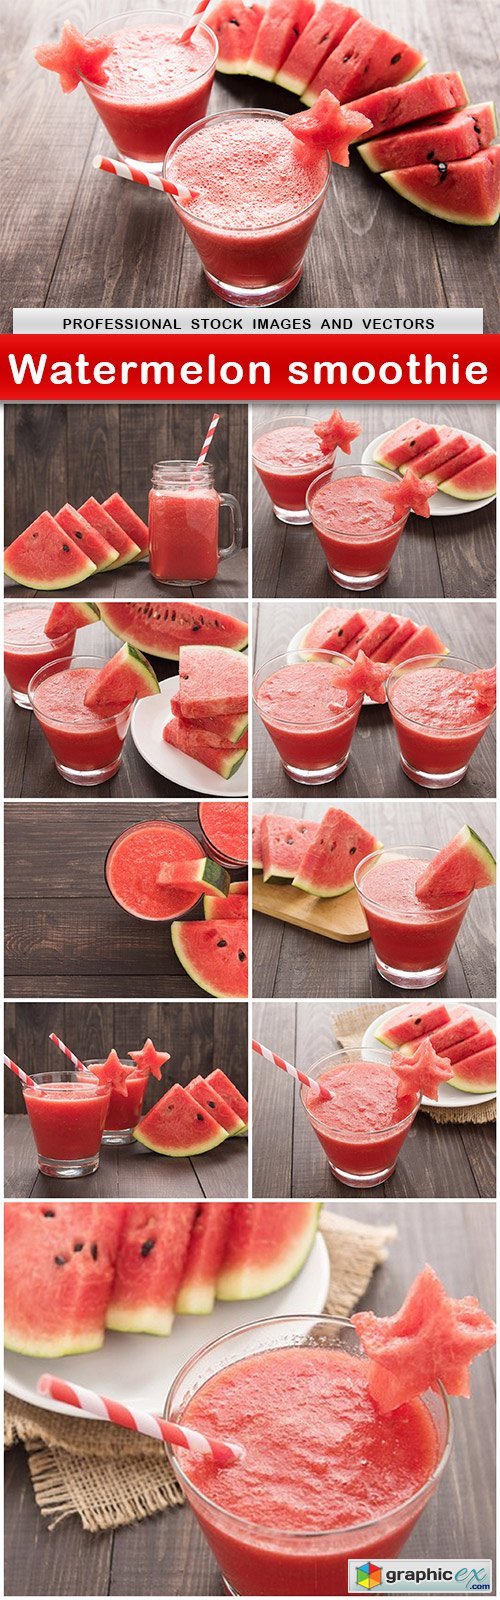 Watermelon smoothie - 10 UHQ JPEG